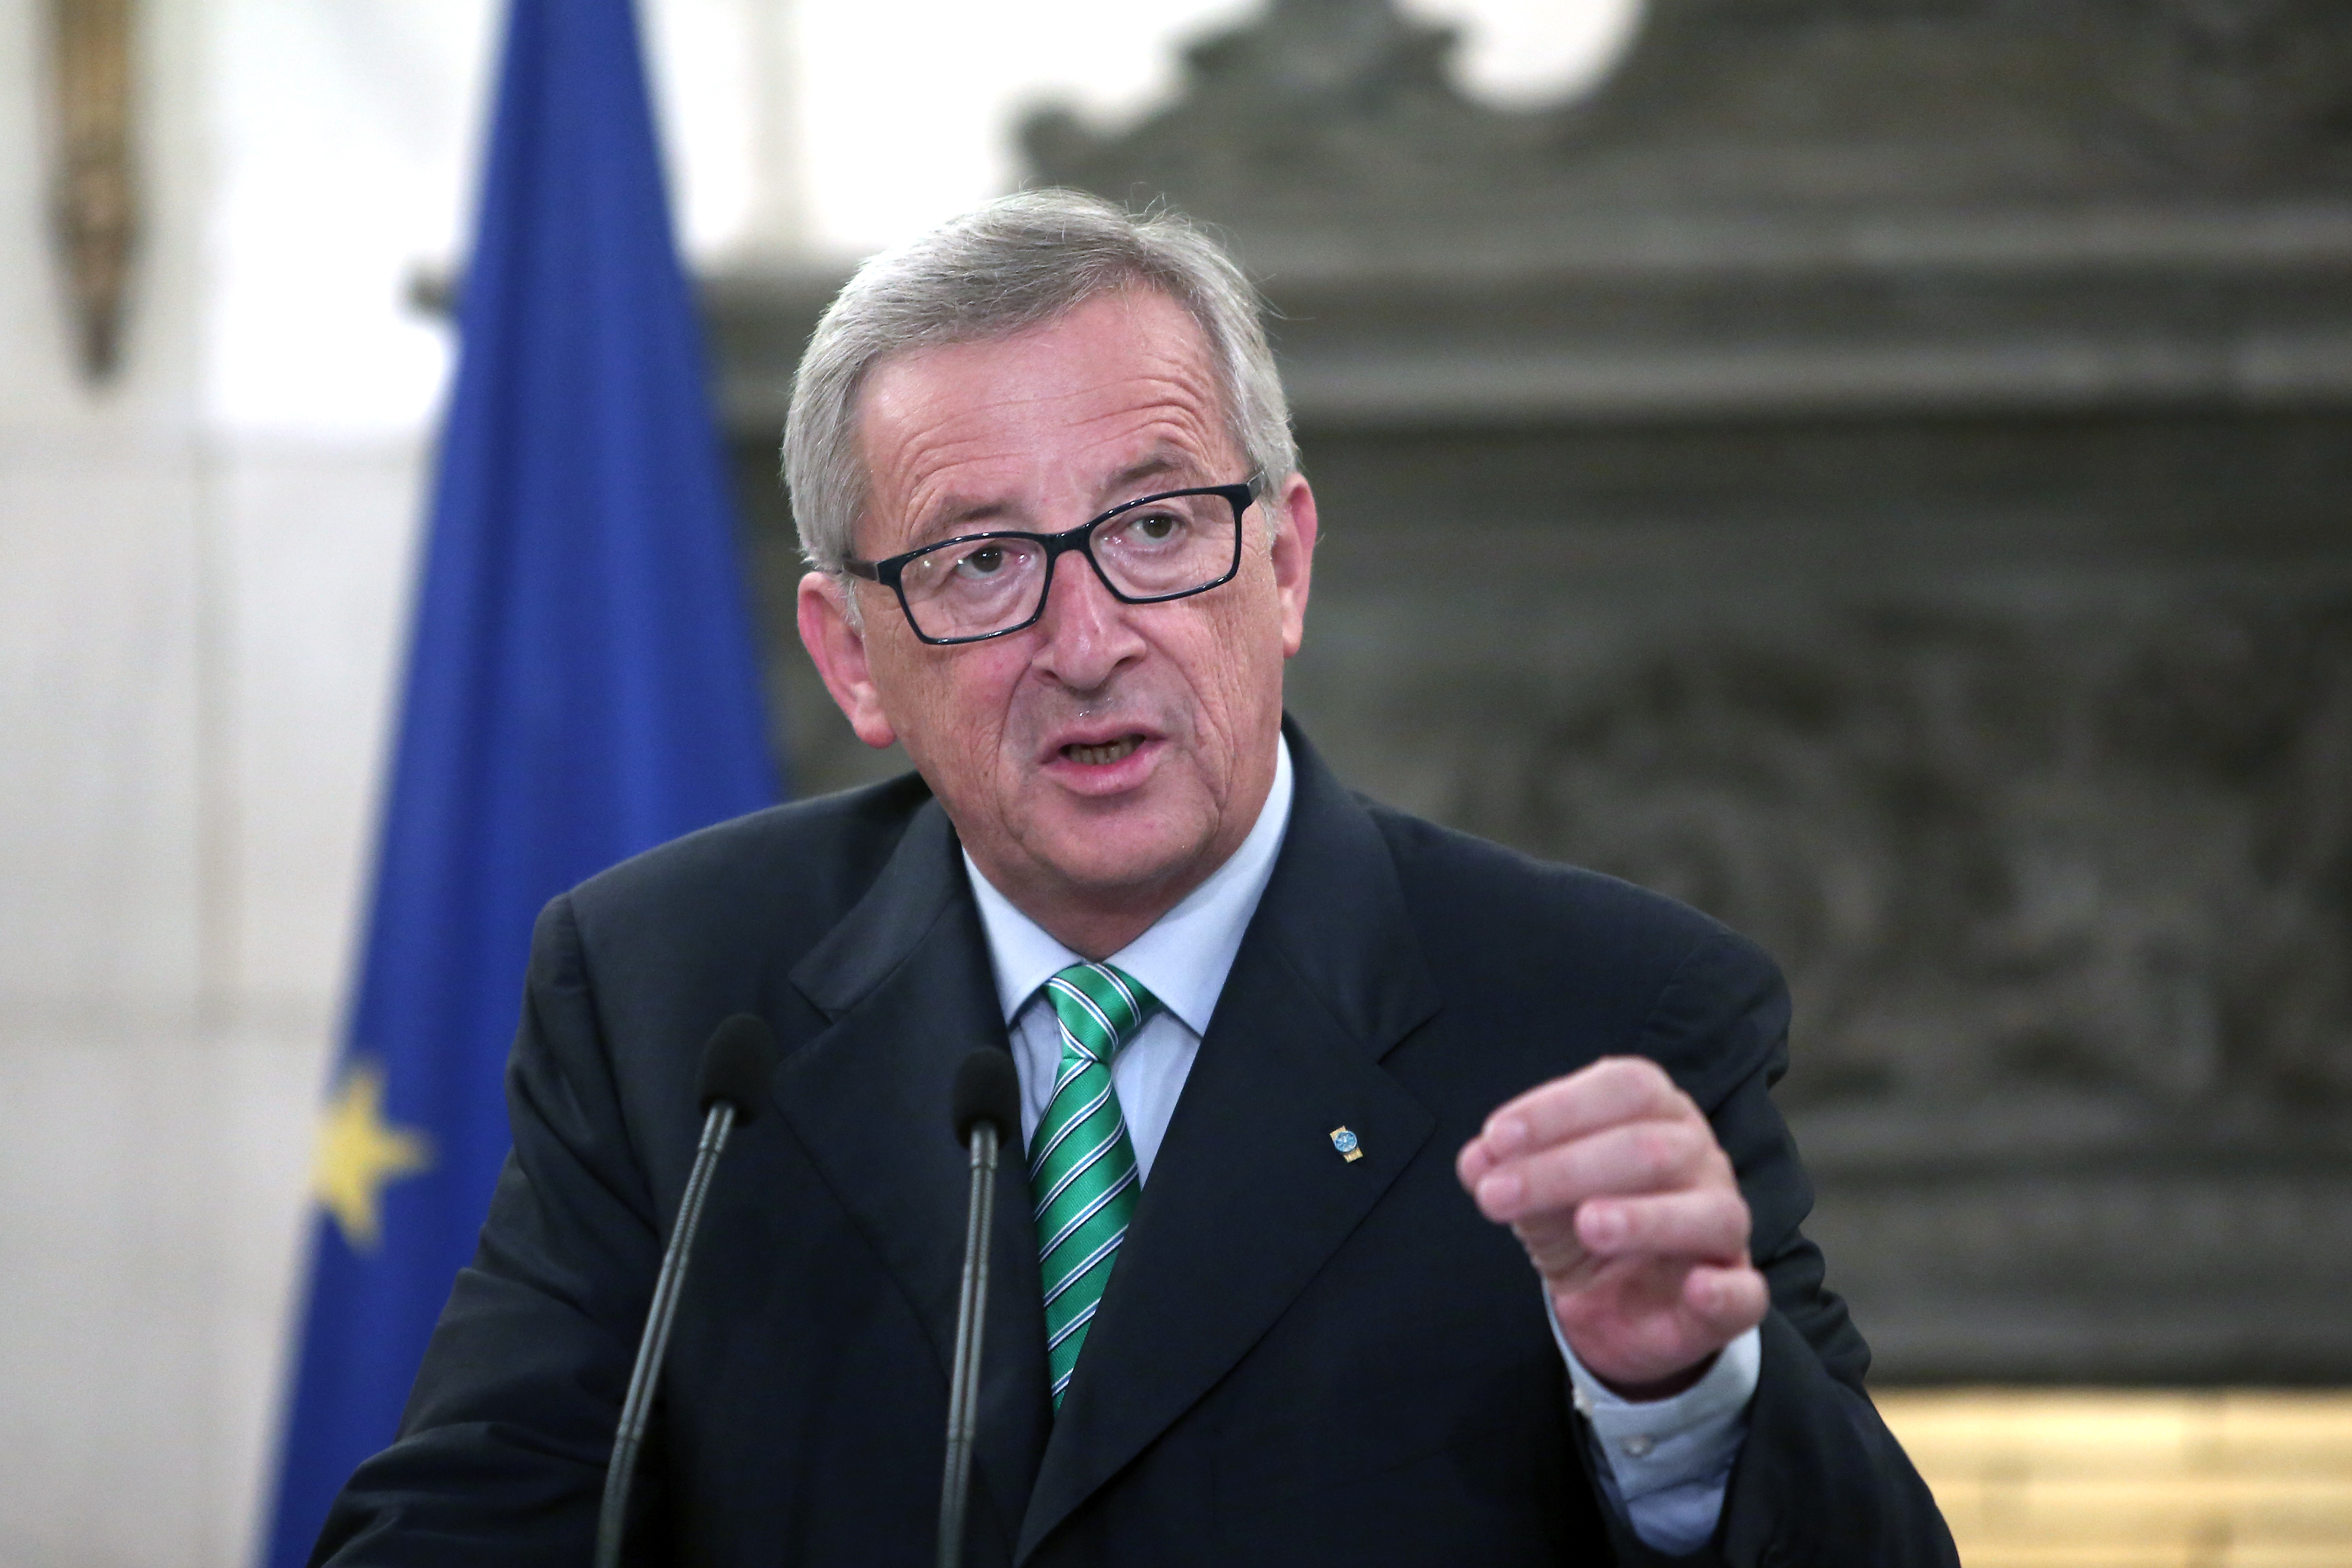 Jean-Claude Juncker © European Union, 2015